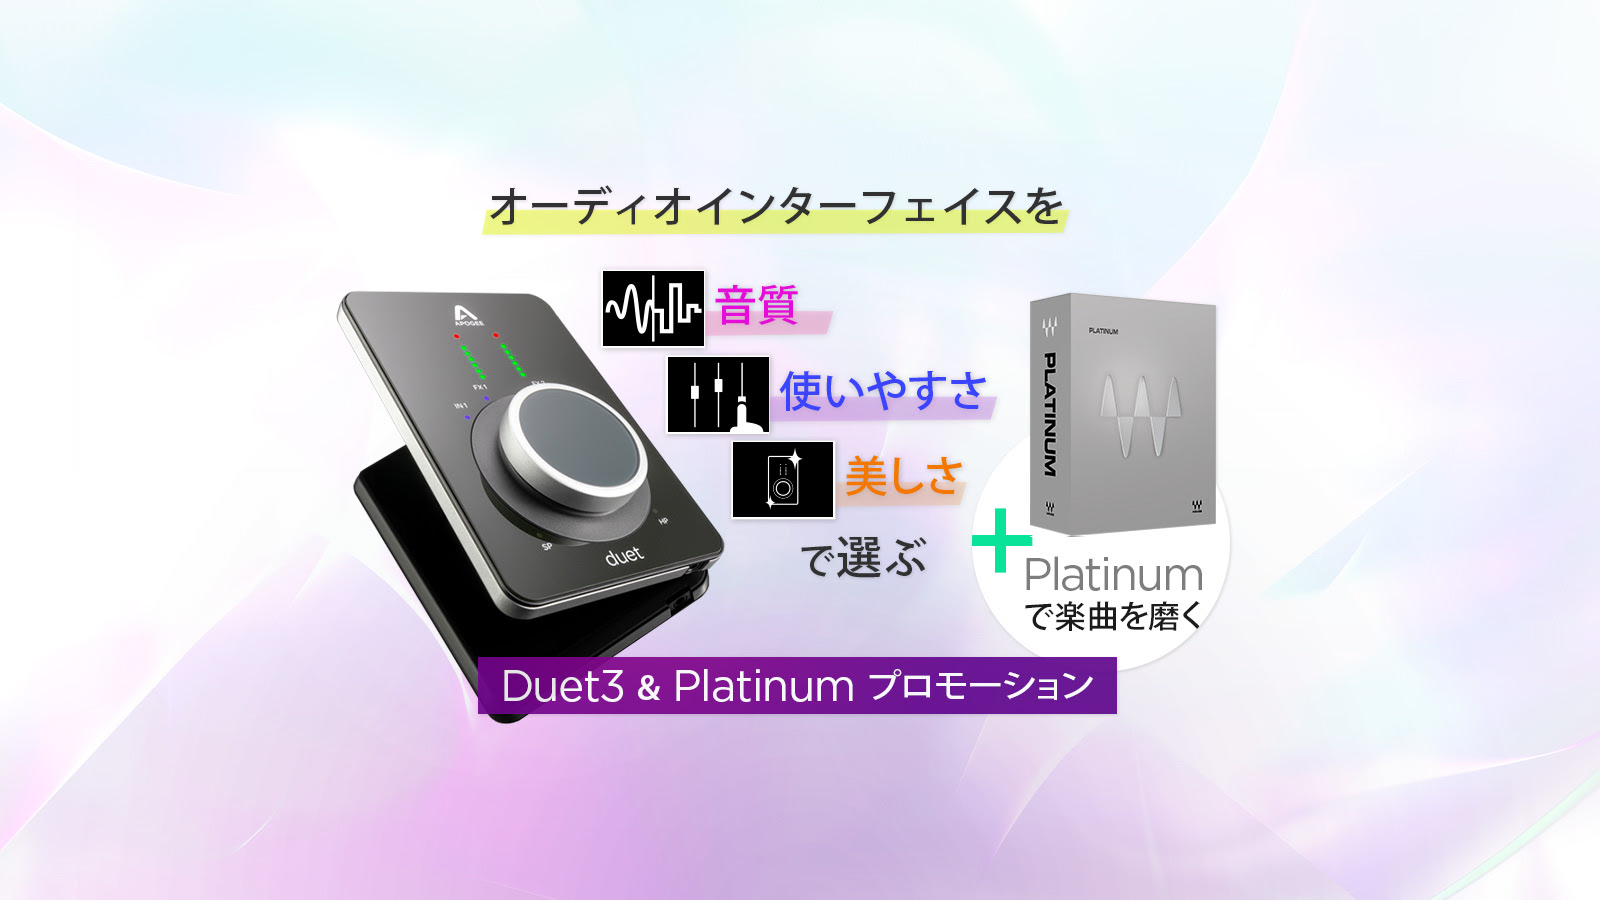 <h2 class="title">Apogee Duet 3を購入してWaves Platinumを無料でゲット！Duet3 & Platinumプロモーション</h2>